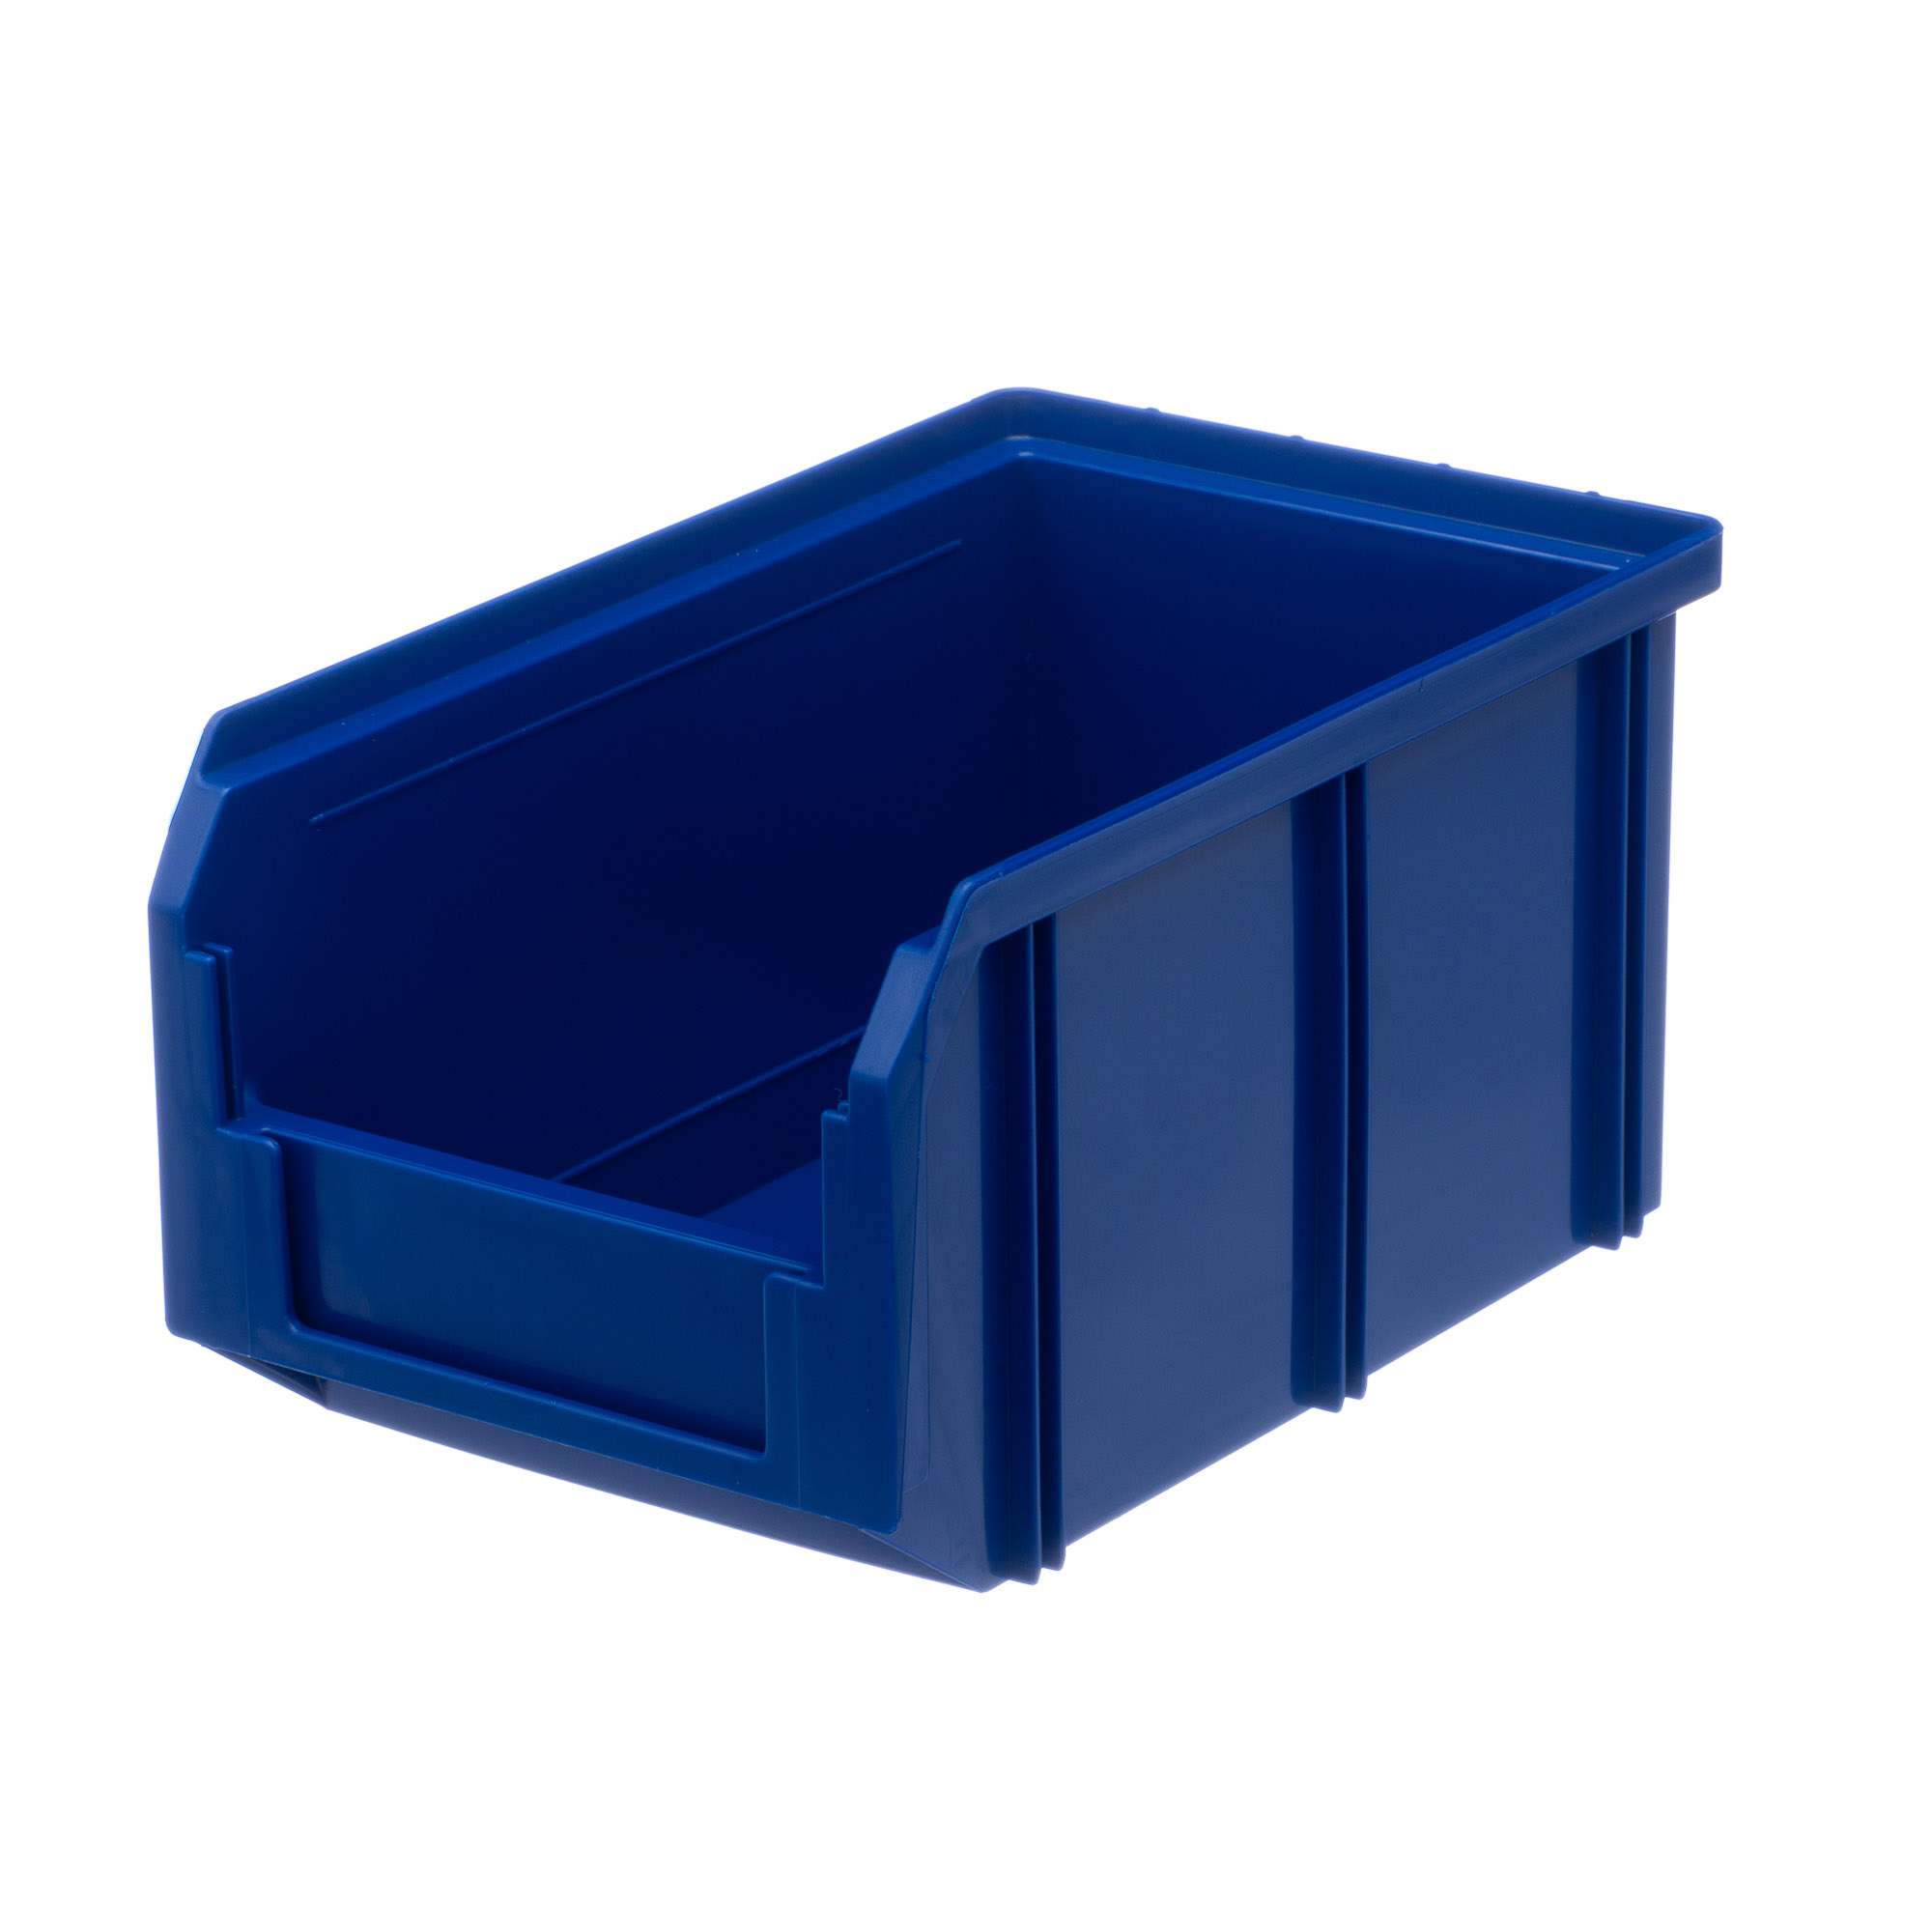 Пластиковый ящик Стелла-техник V-2-синий 234х149х120мм, 3,8 литра пластиковый короб синий прозрачный стелла с 2